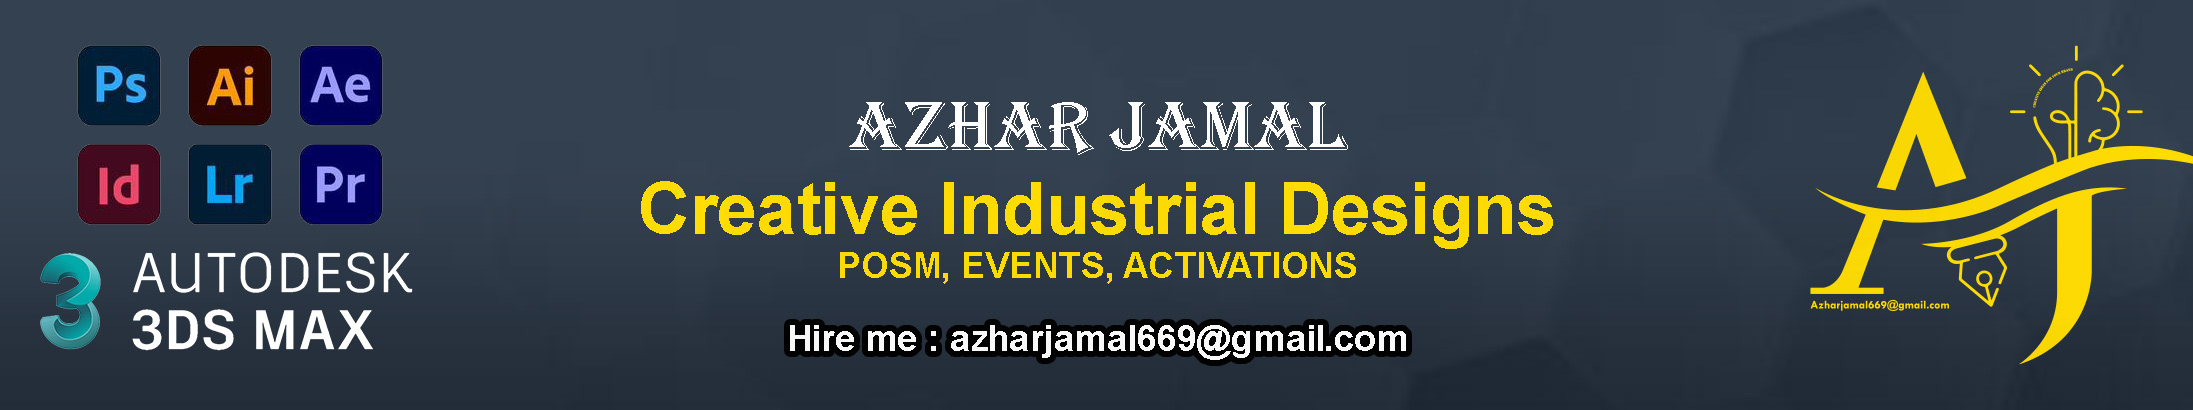 Azhar Jamals profilbanner